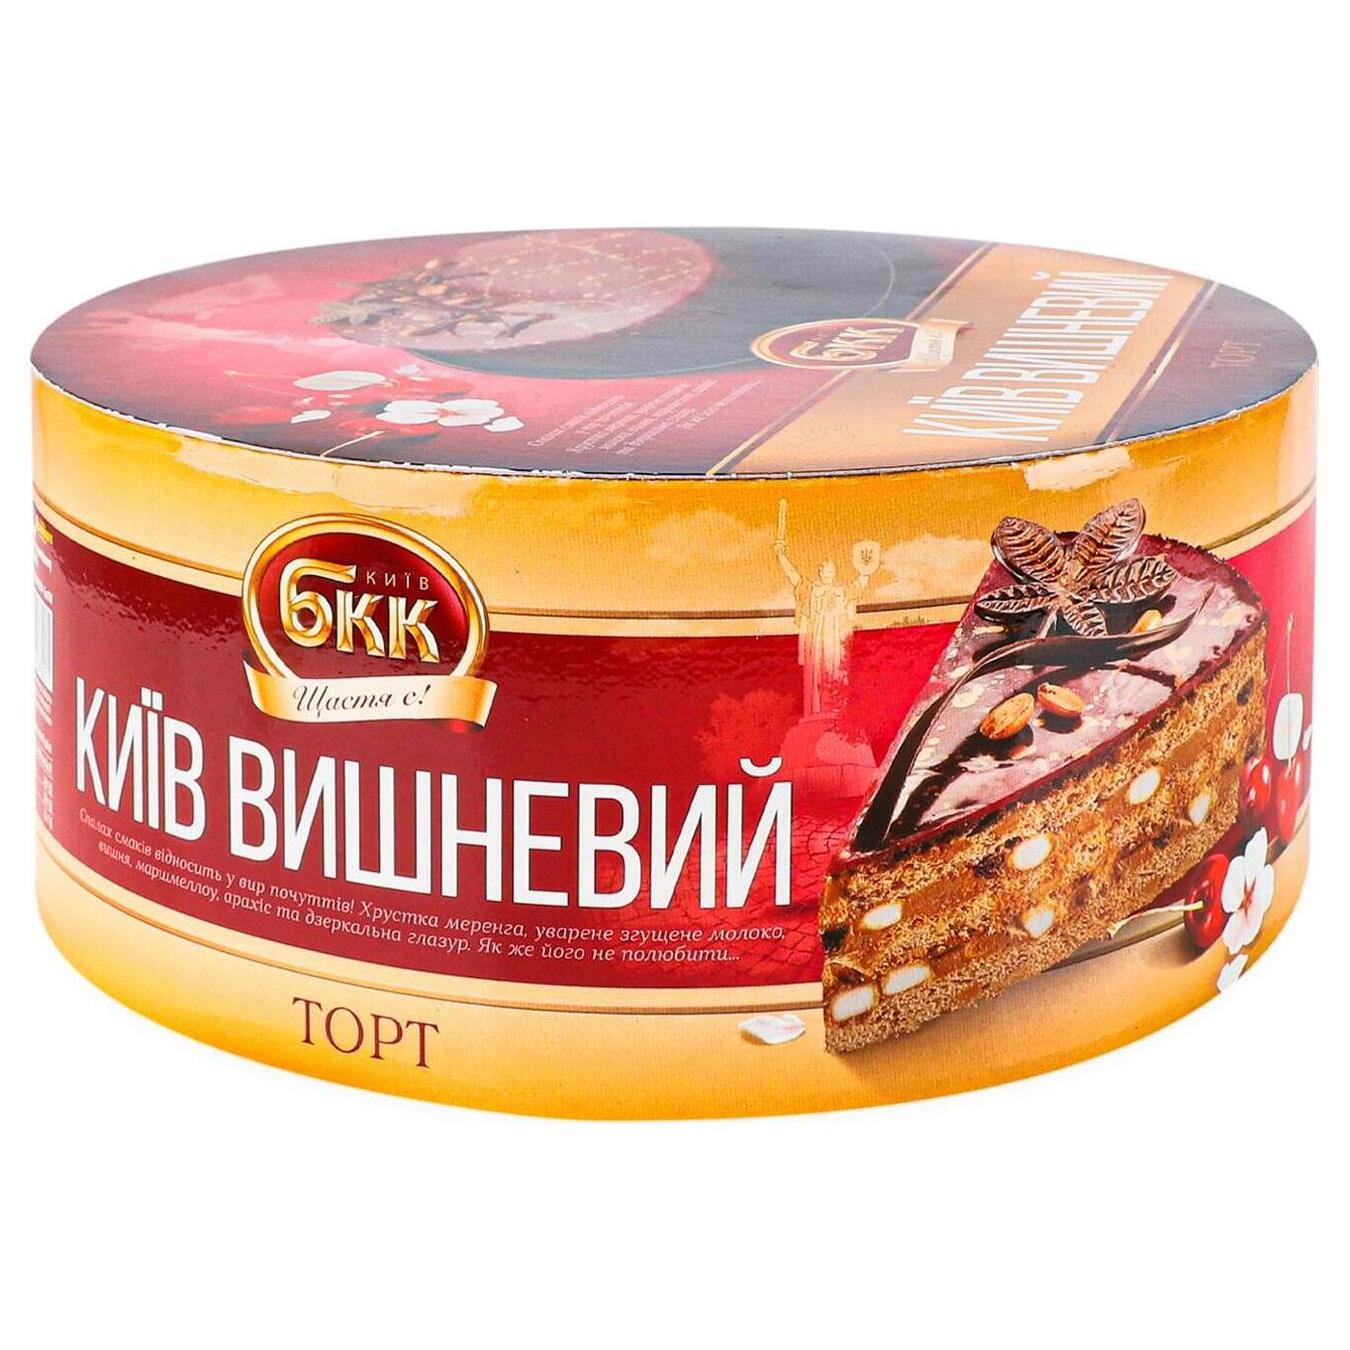 Cake BKK Kyiv cherry 450g